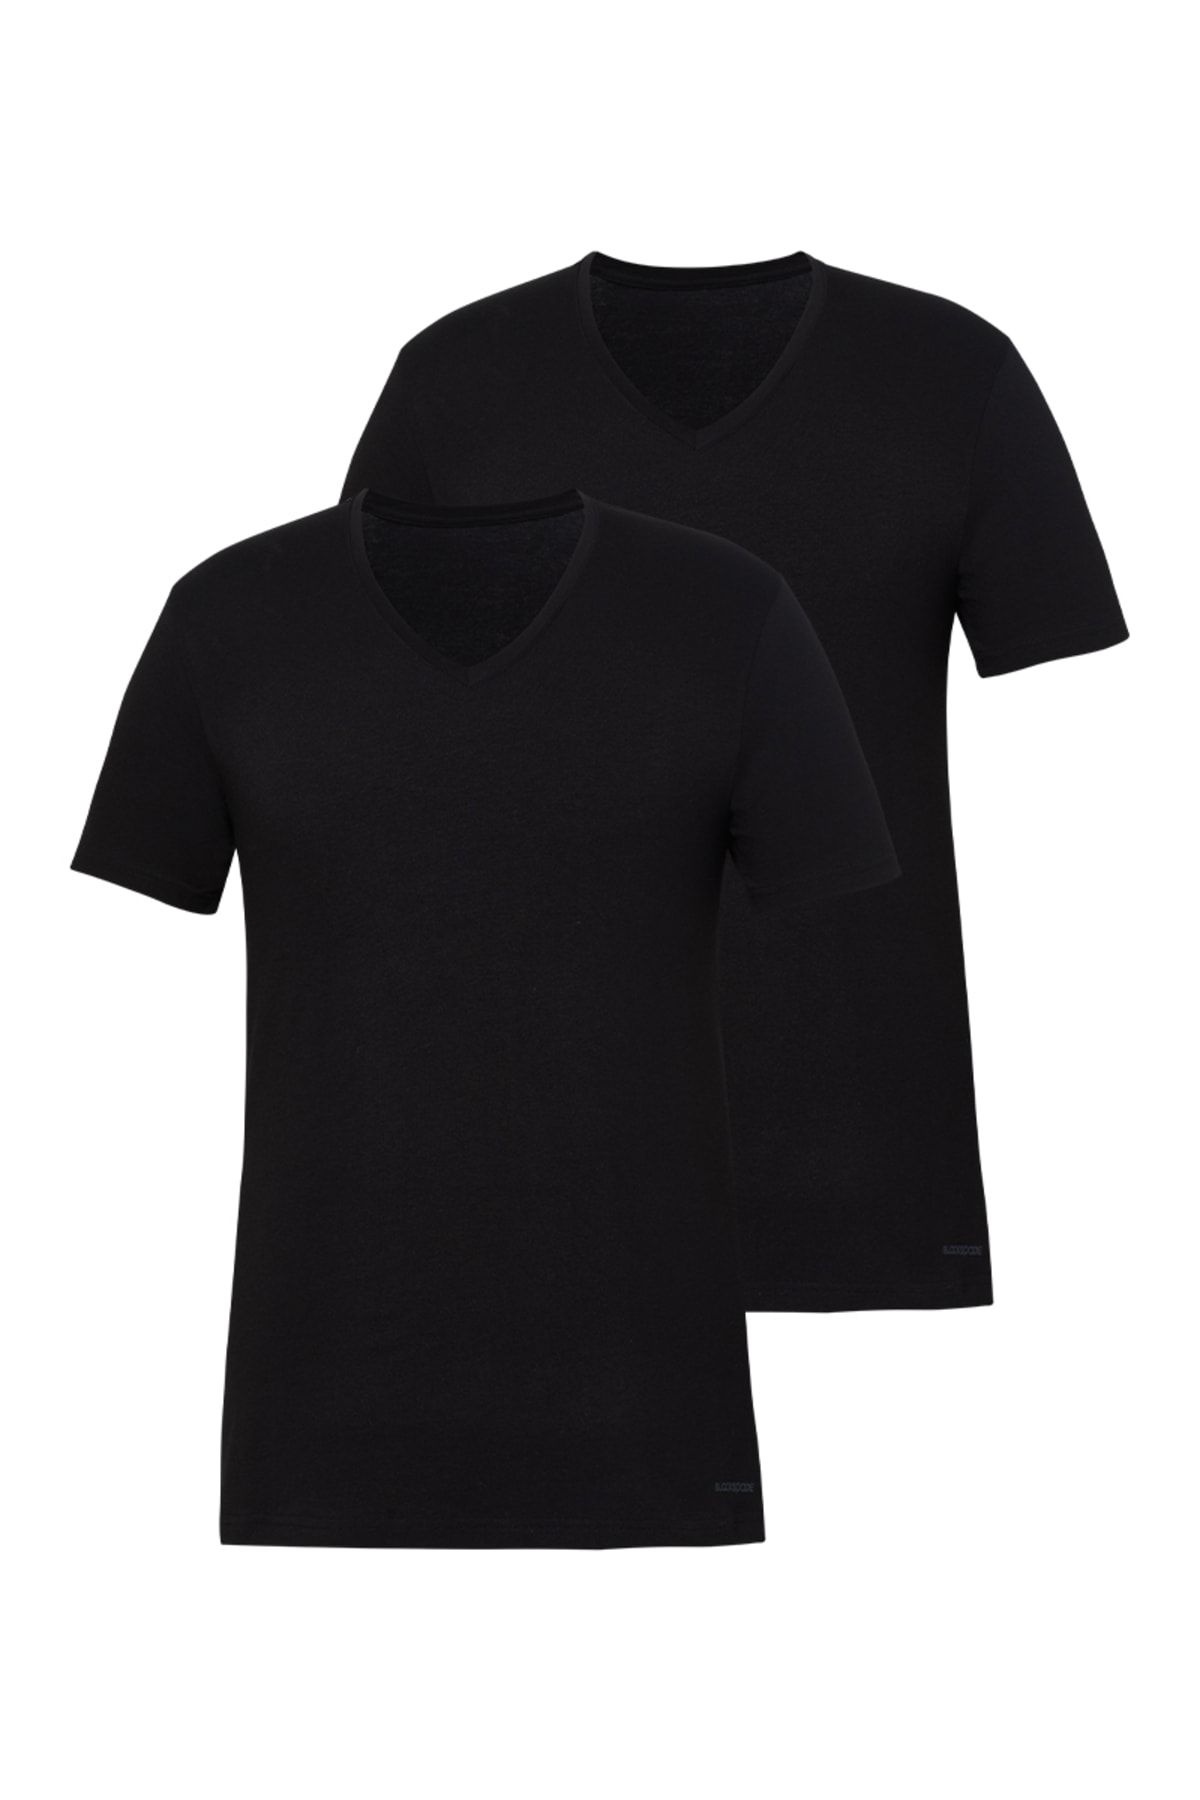 Blackspade Erkek Tshirt 2li Paket Tender Cotton 9671 - Siyah